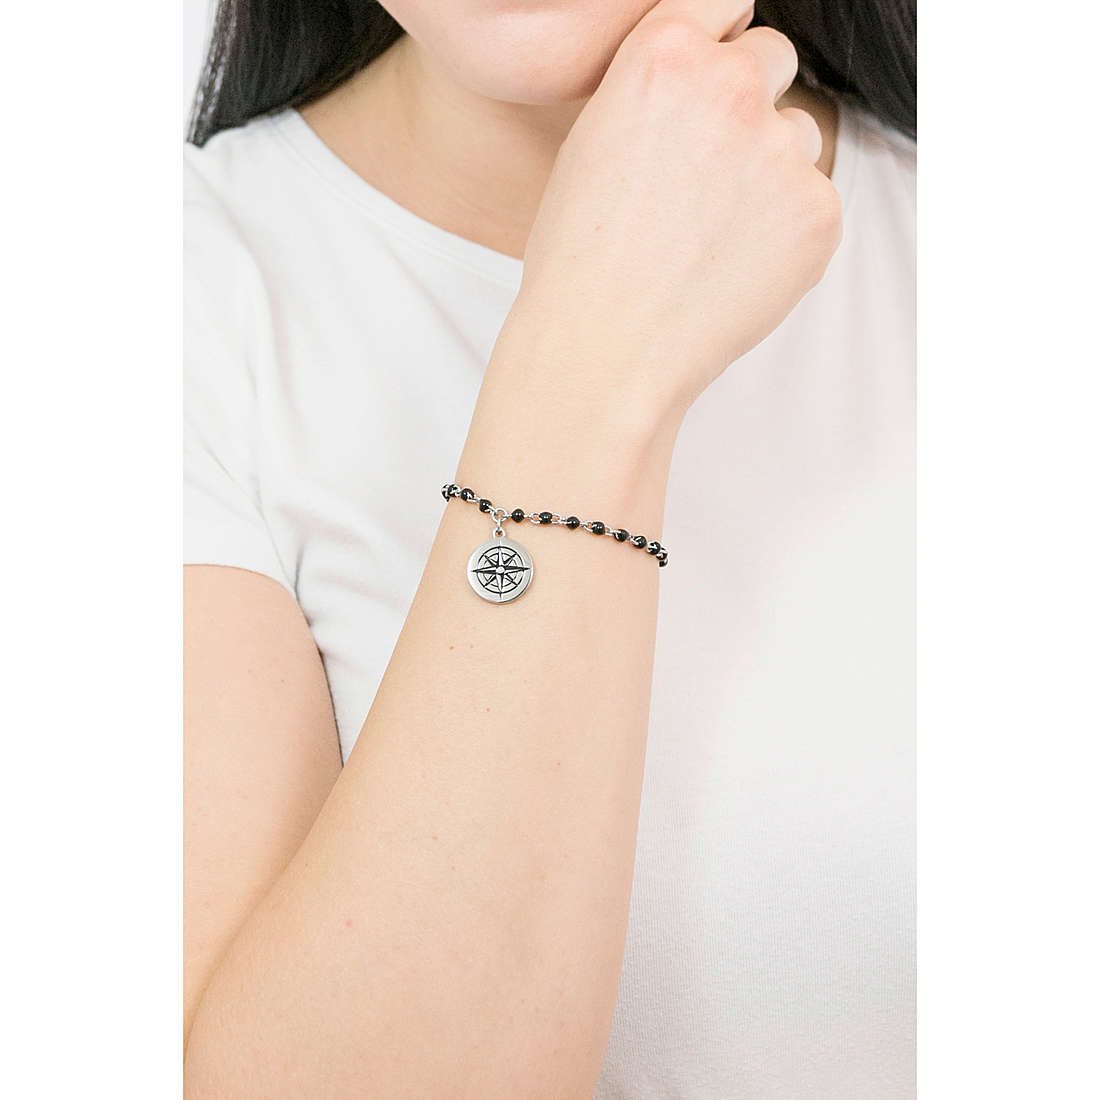 Kidult bracelets Symbols woman 731851 wearing